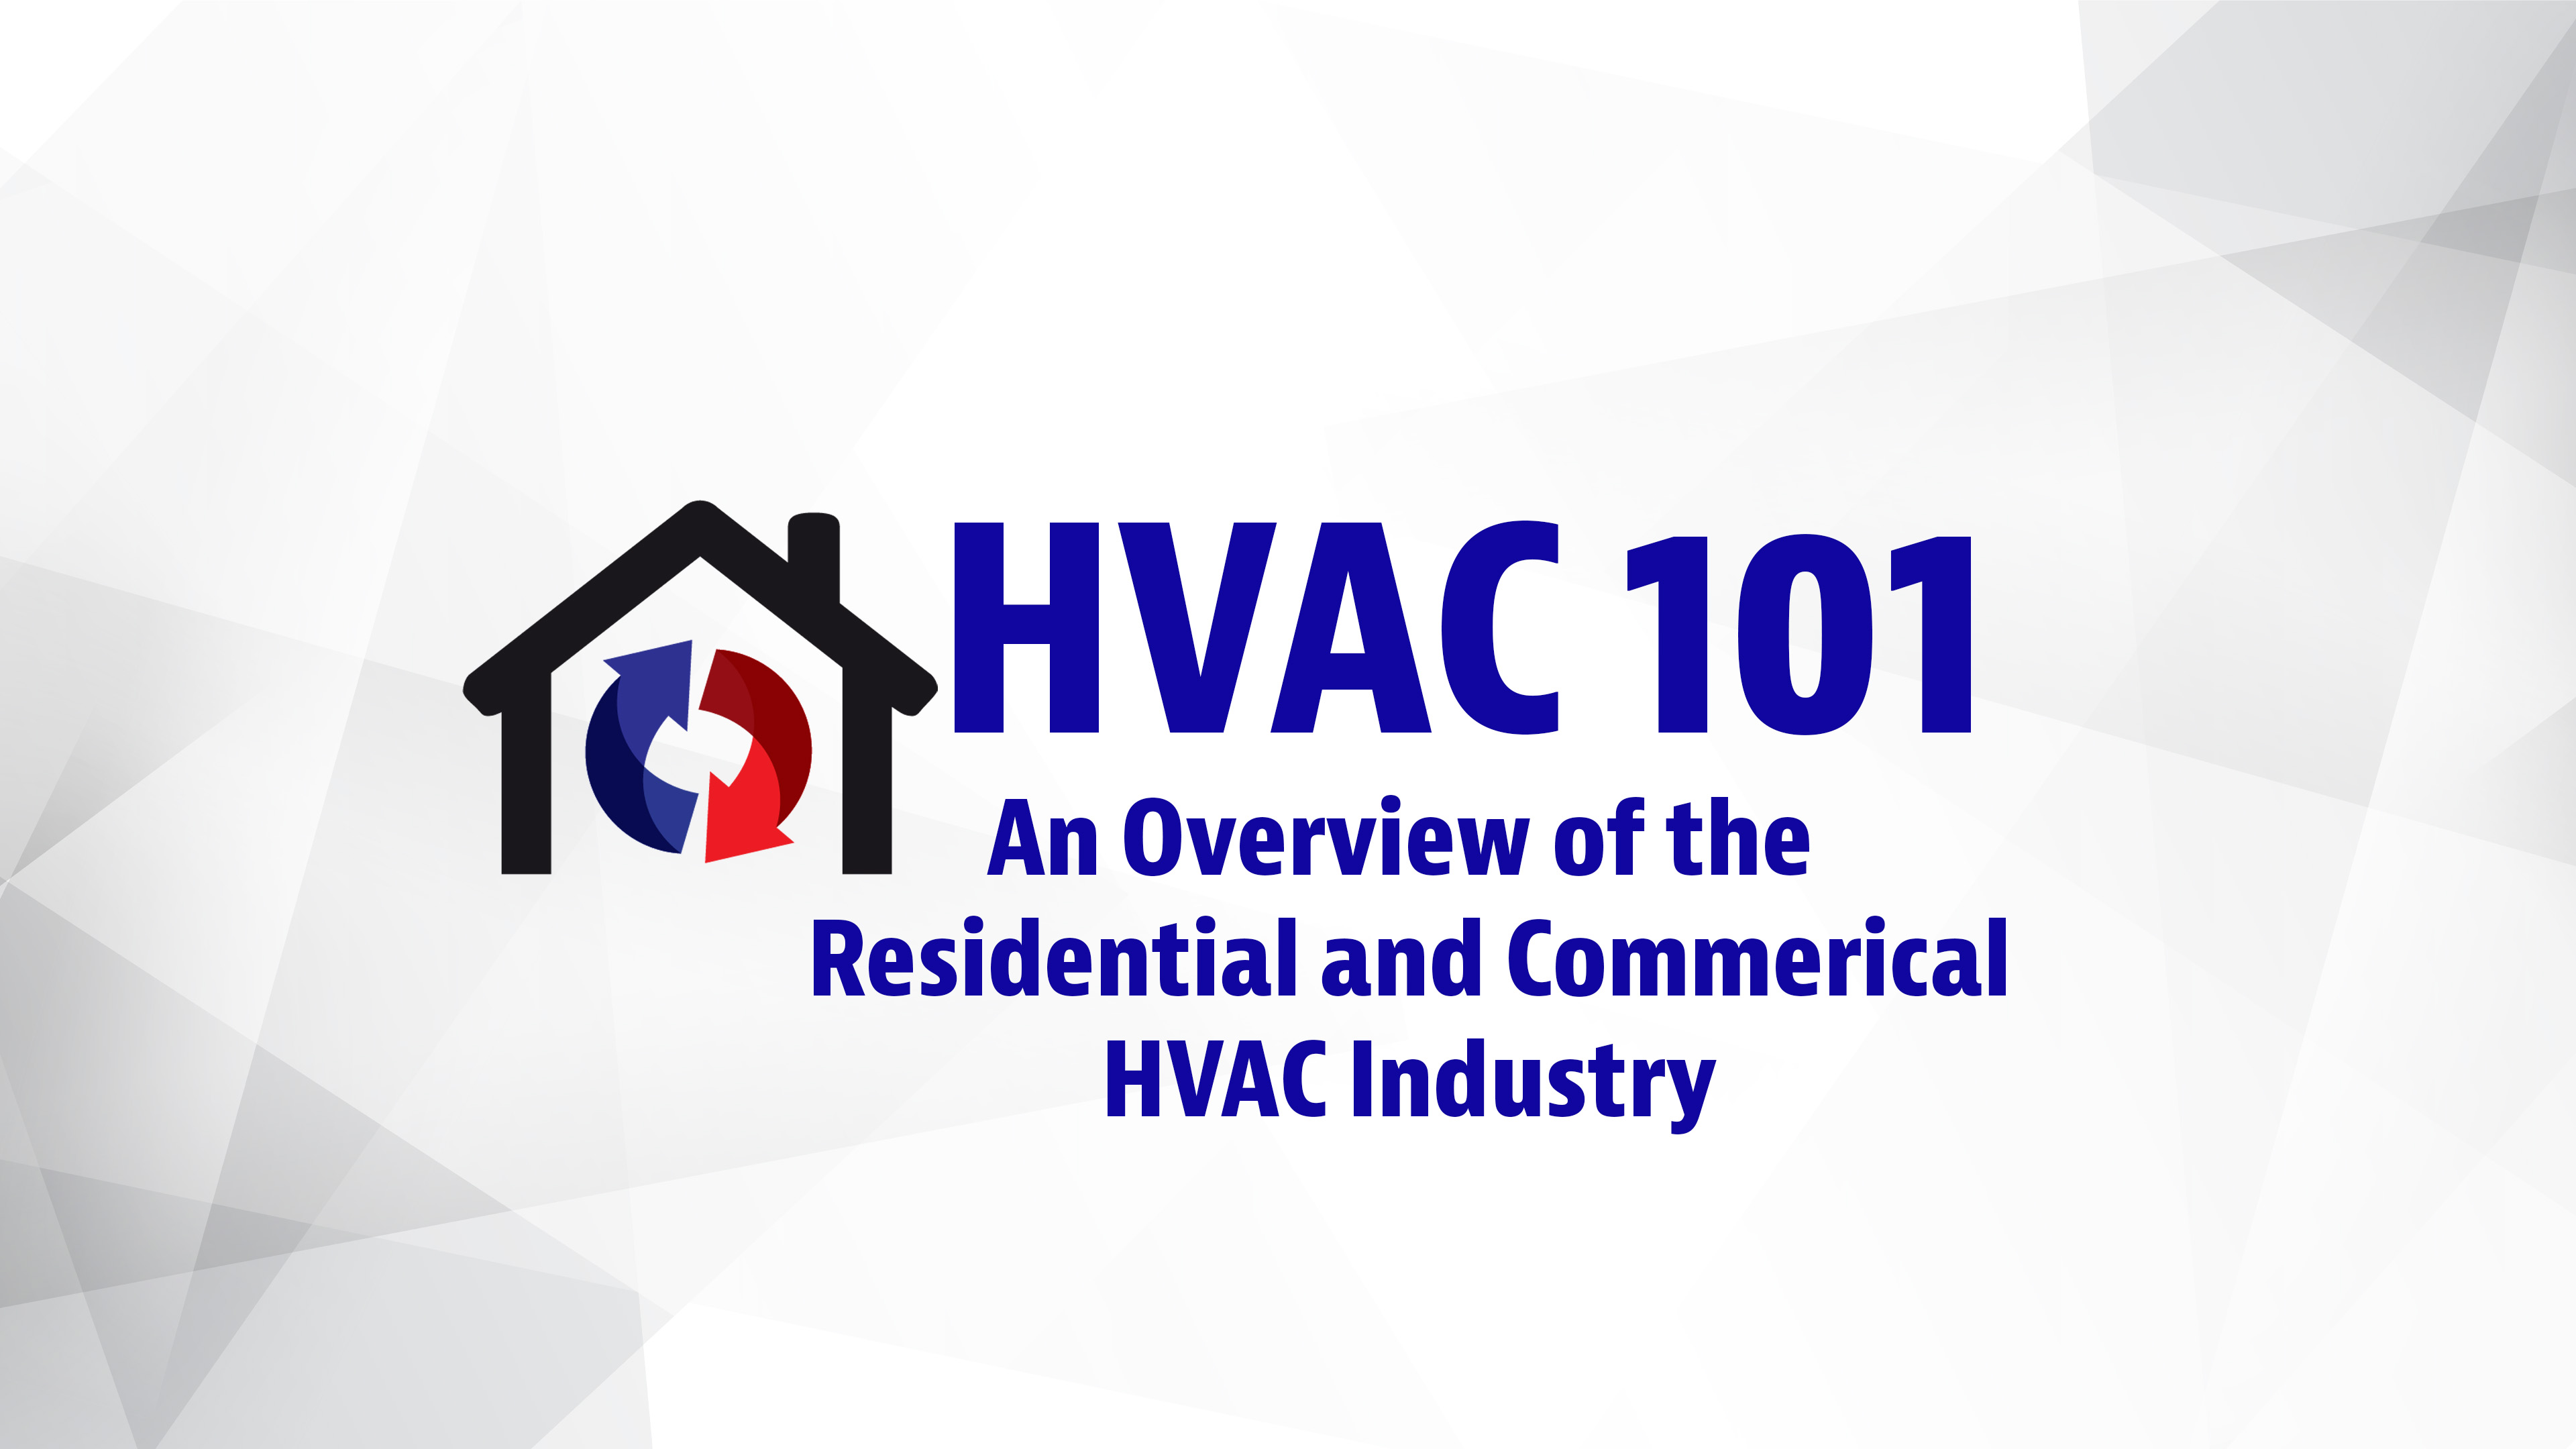 HVAC 101 Course